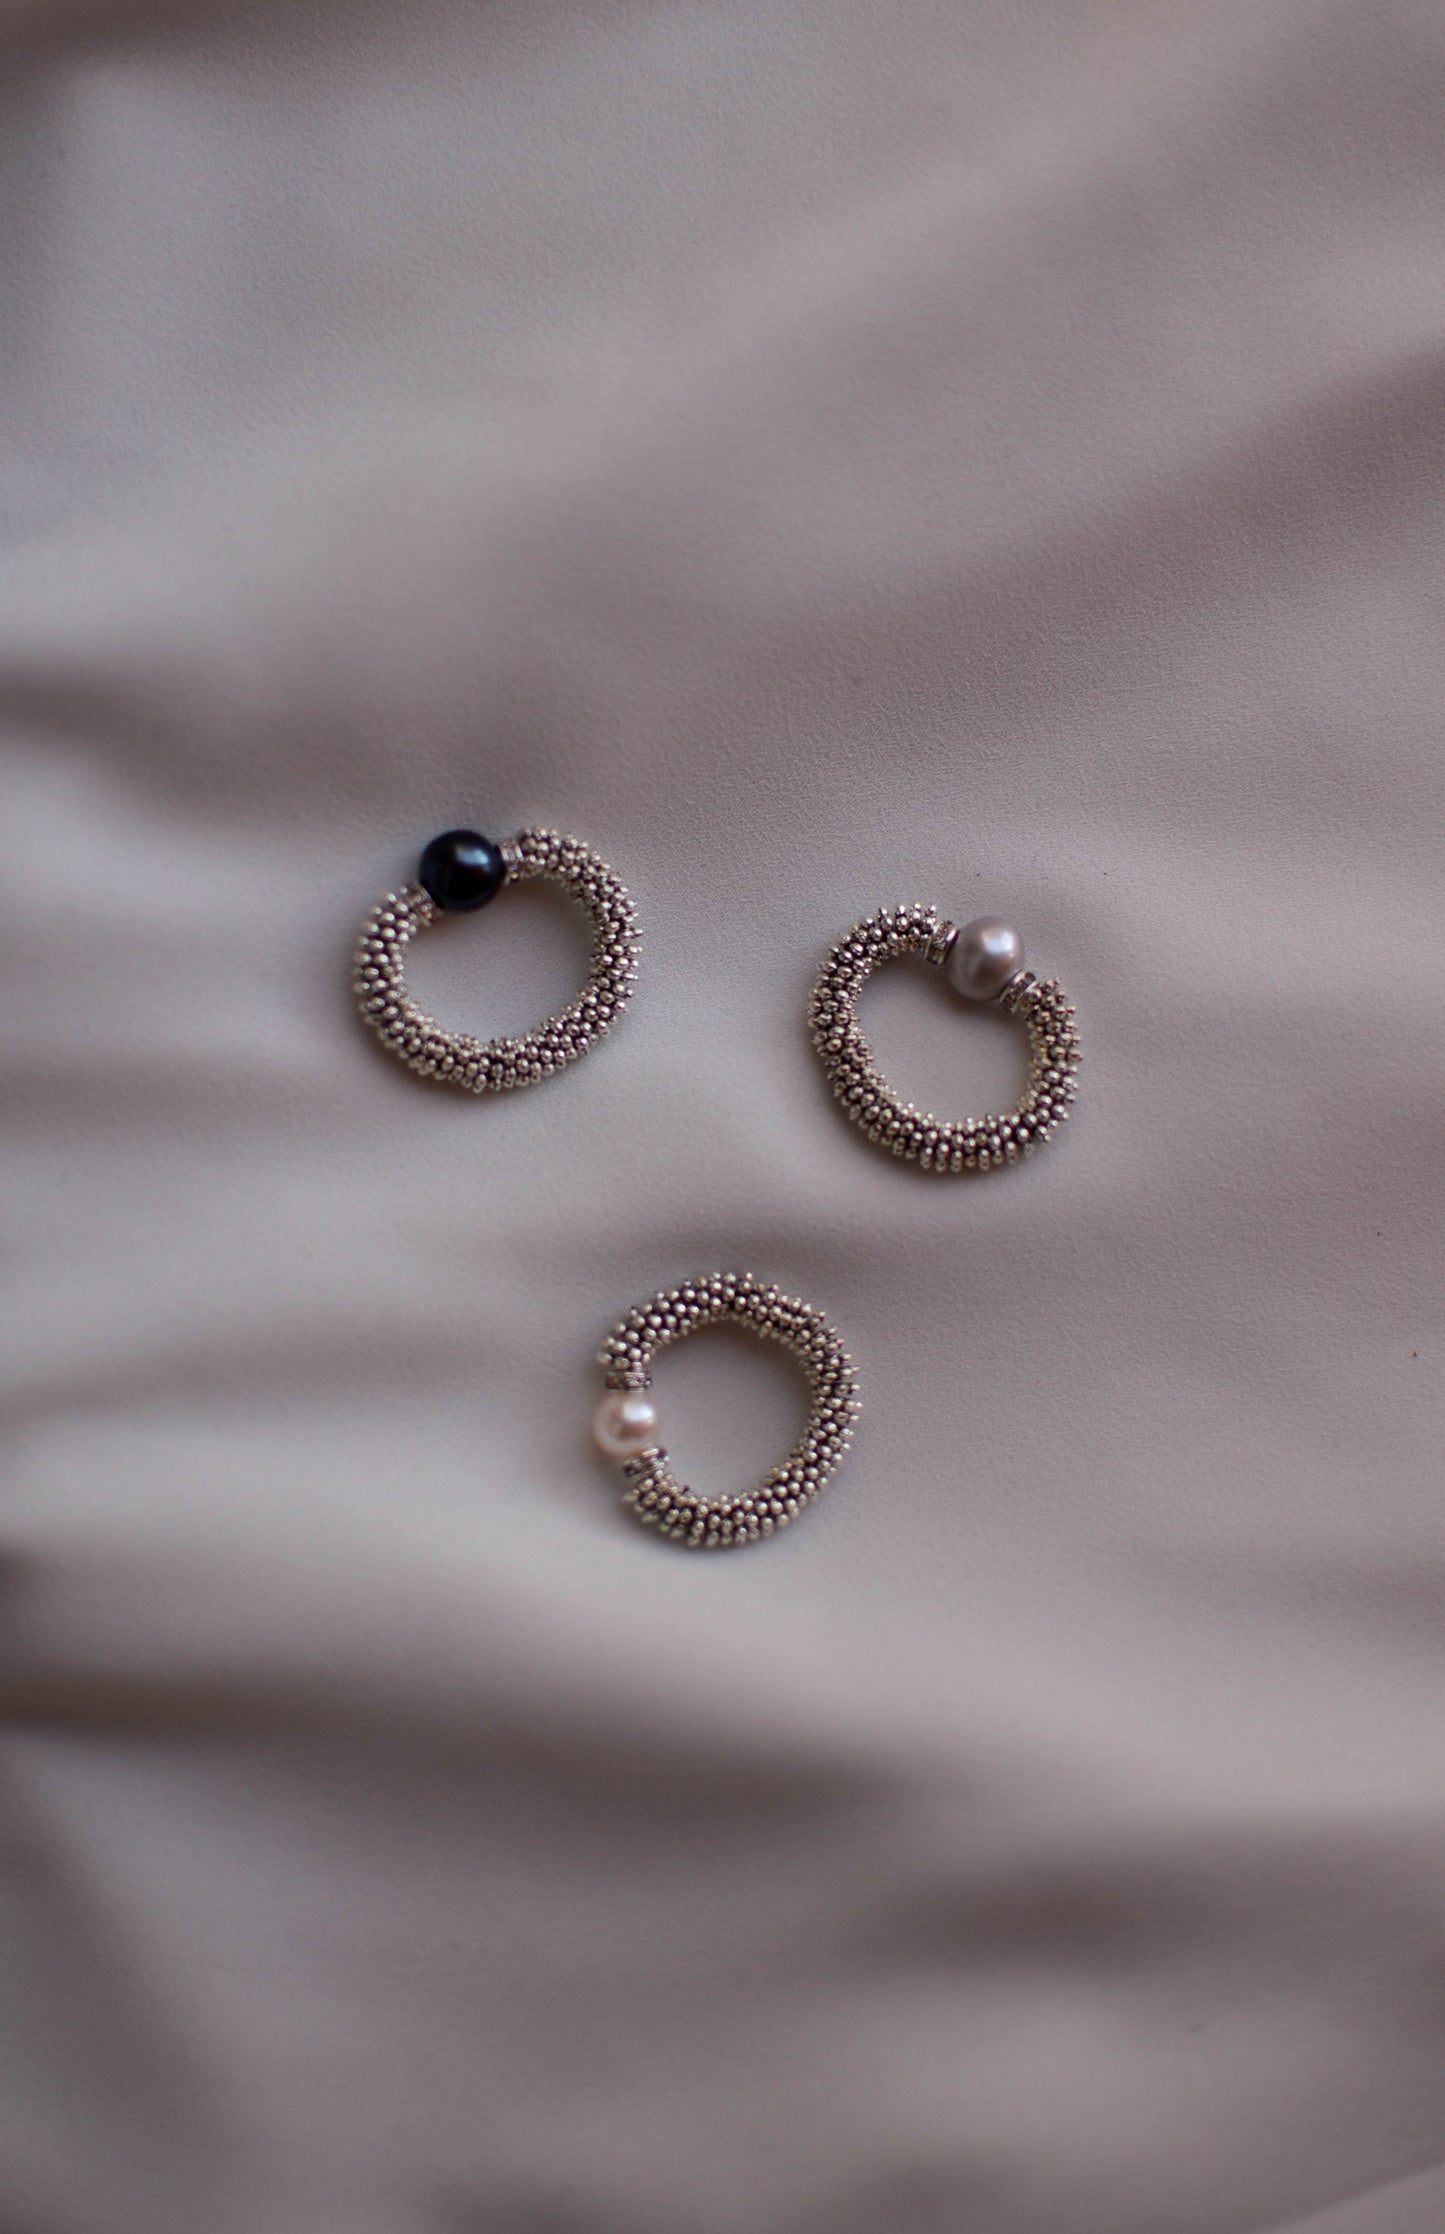 Stretchy Grey Pearl Ring - Pearls4Girls